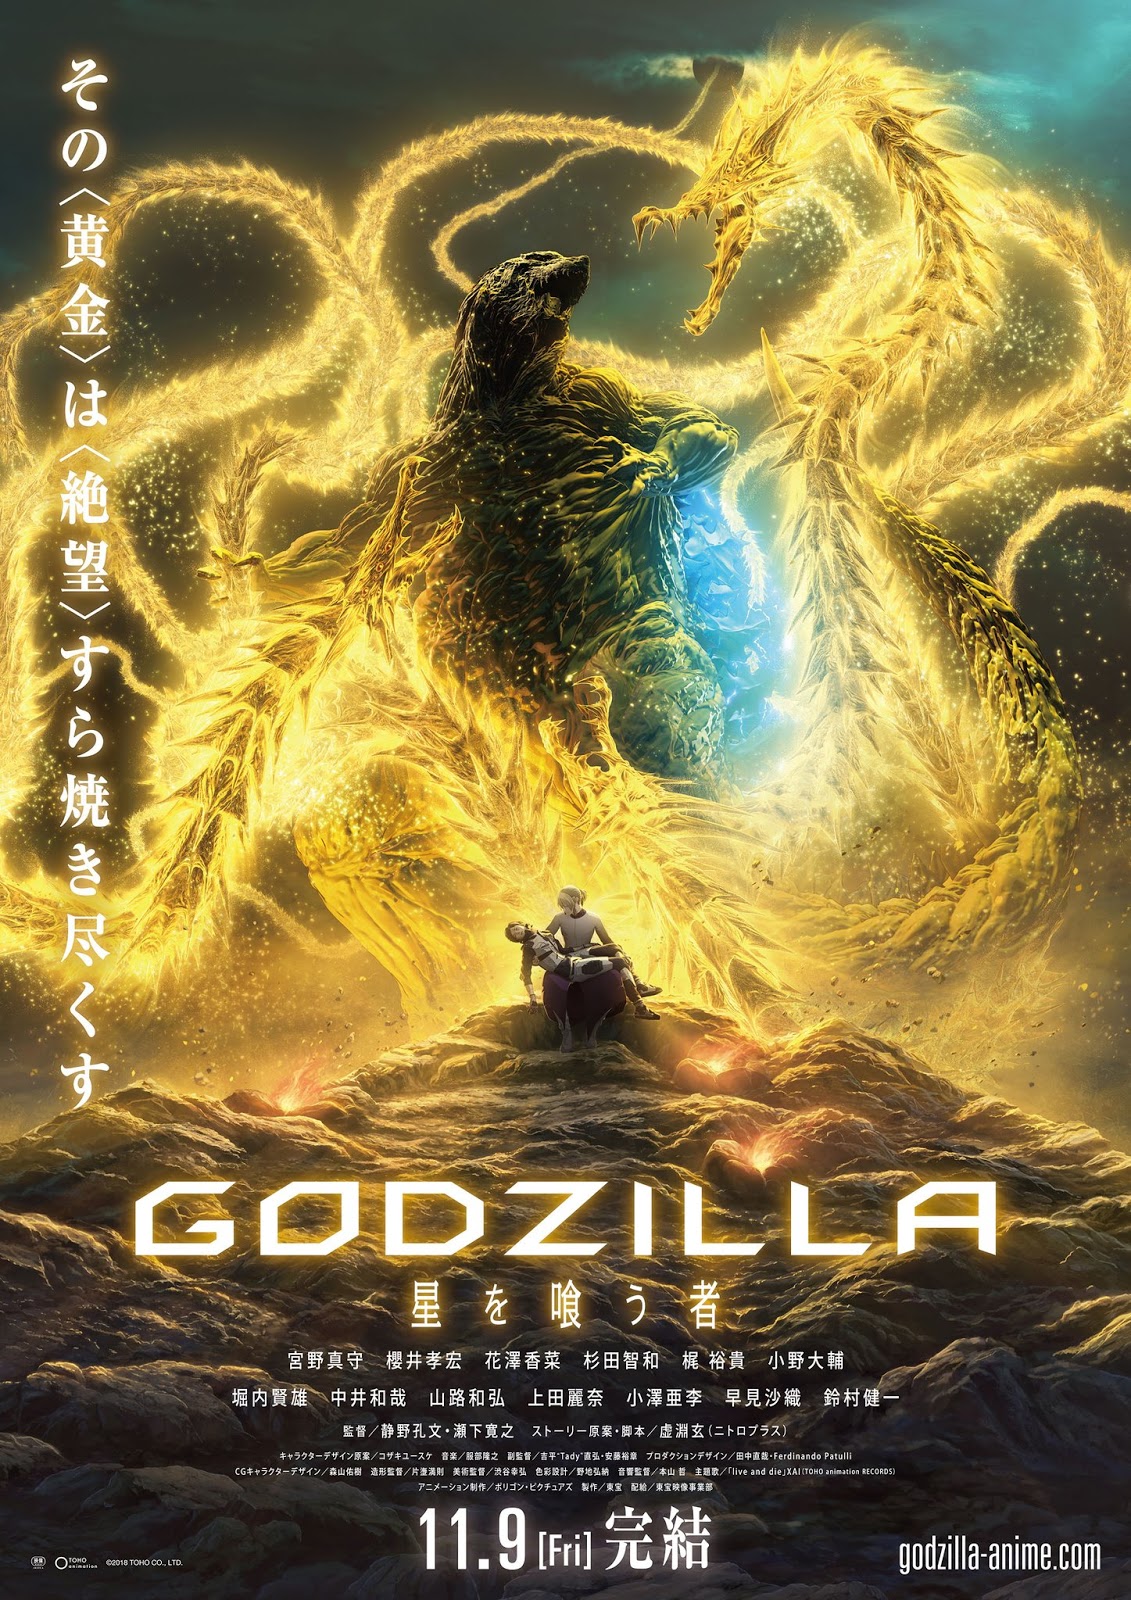 GodZilla The Planet Eater (2019) ก็อตซิลล่า 3 จอมเขมือบโลก - ดูหนังออนไลน